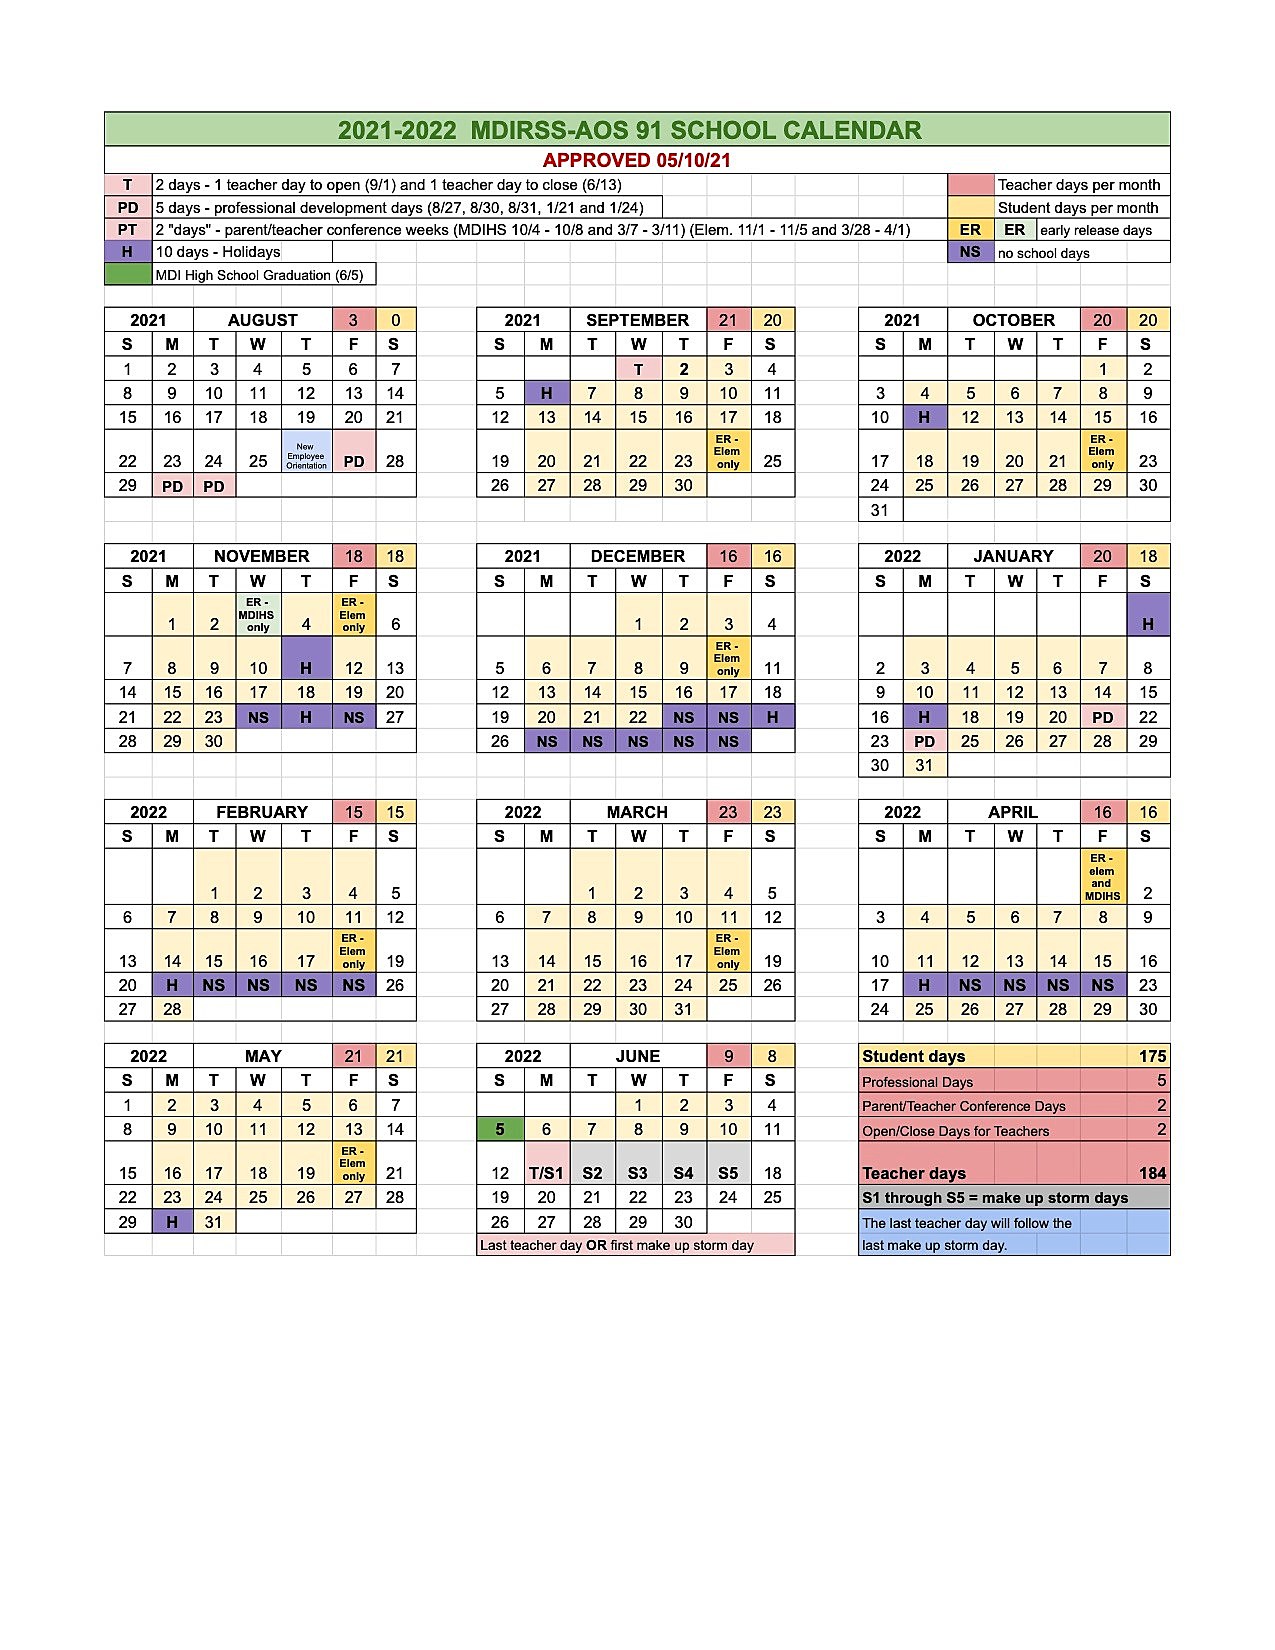 Emerson College Calendar Fall 2022 2021-2022 School Calendar For Aos 91